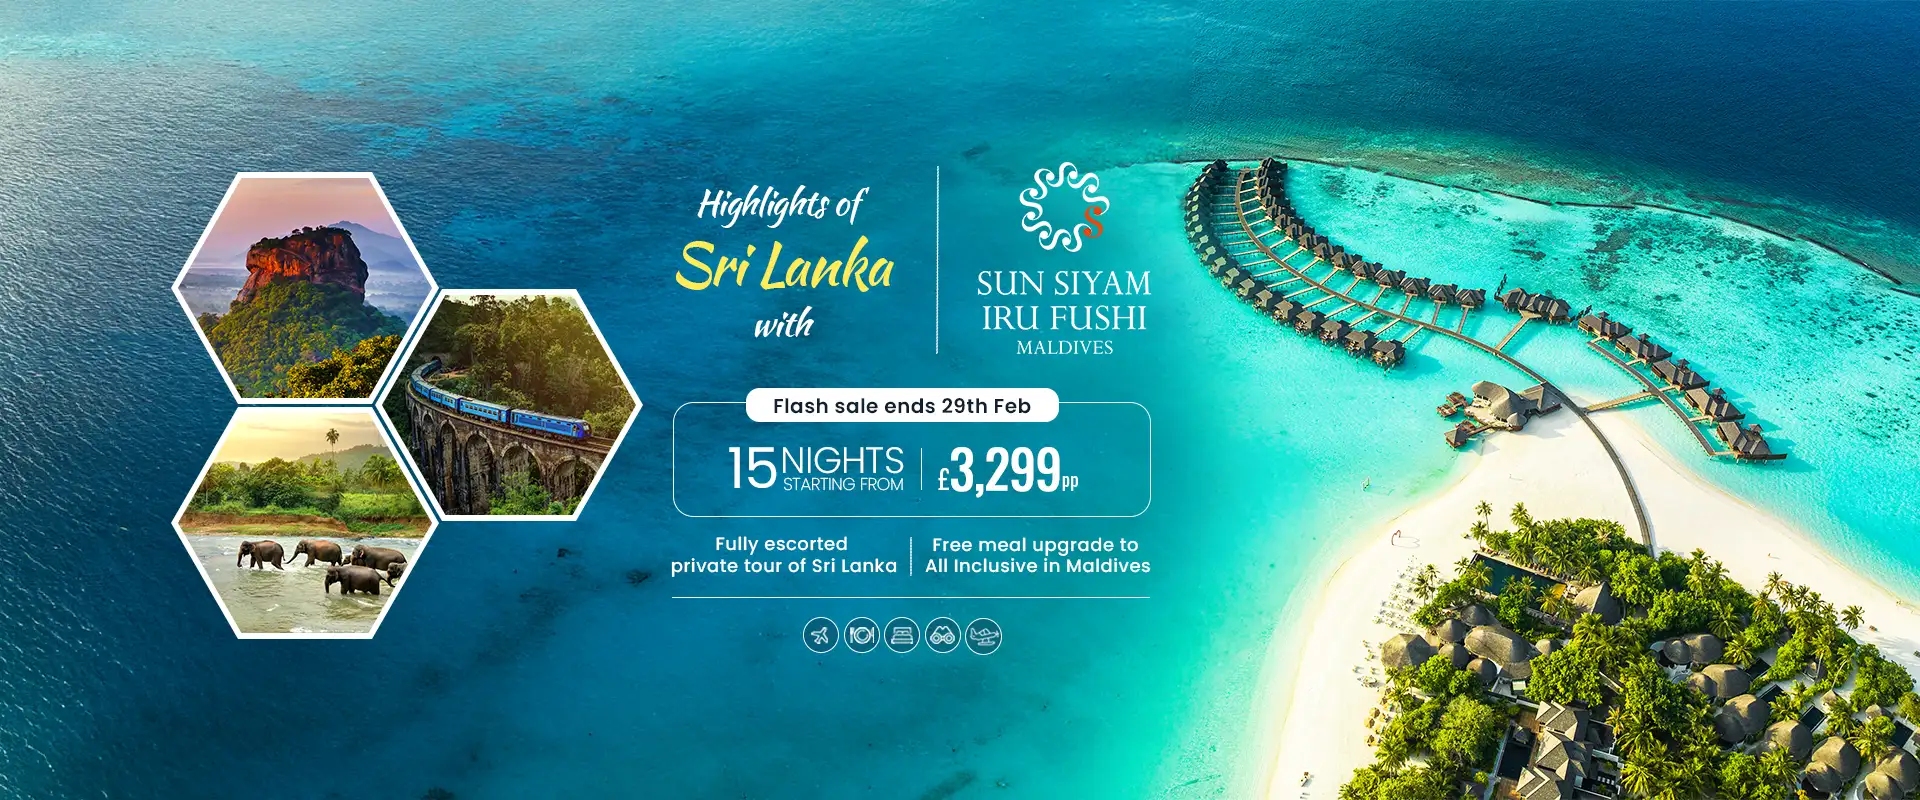 Highlights of Sri Lanka with Sun Siyam Iru Fushi Maldives